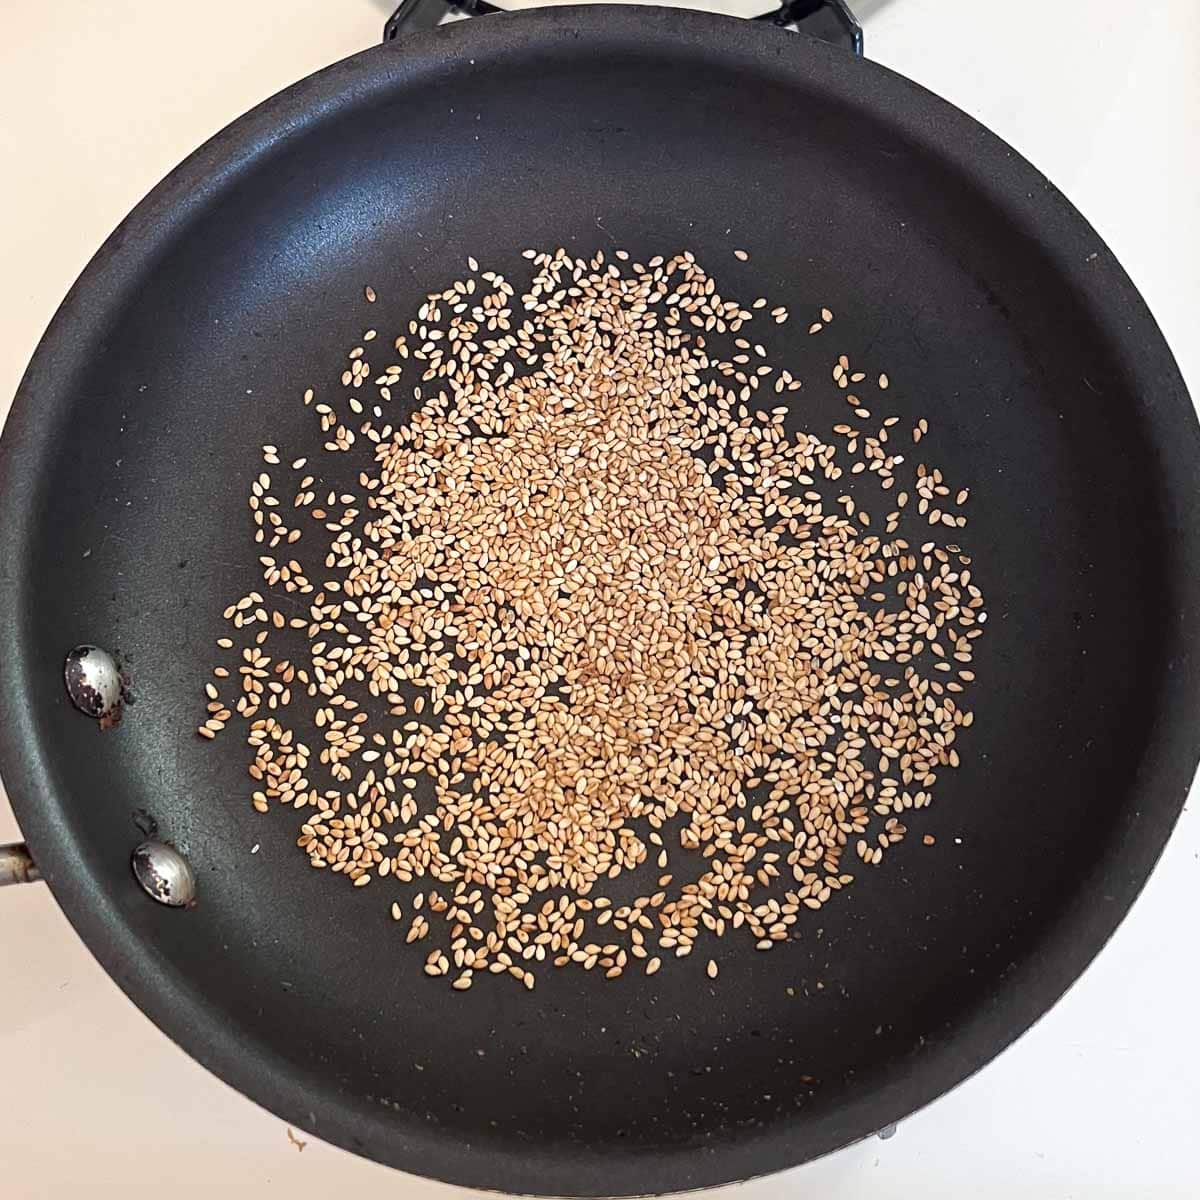 untoasted sesame seeds in pan